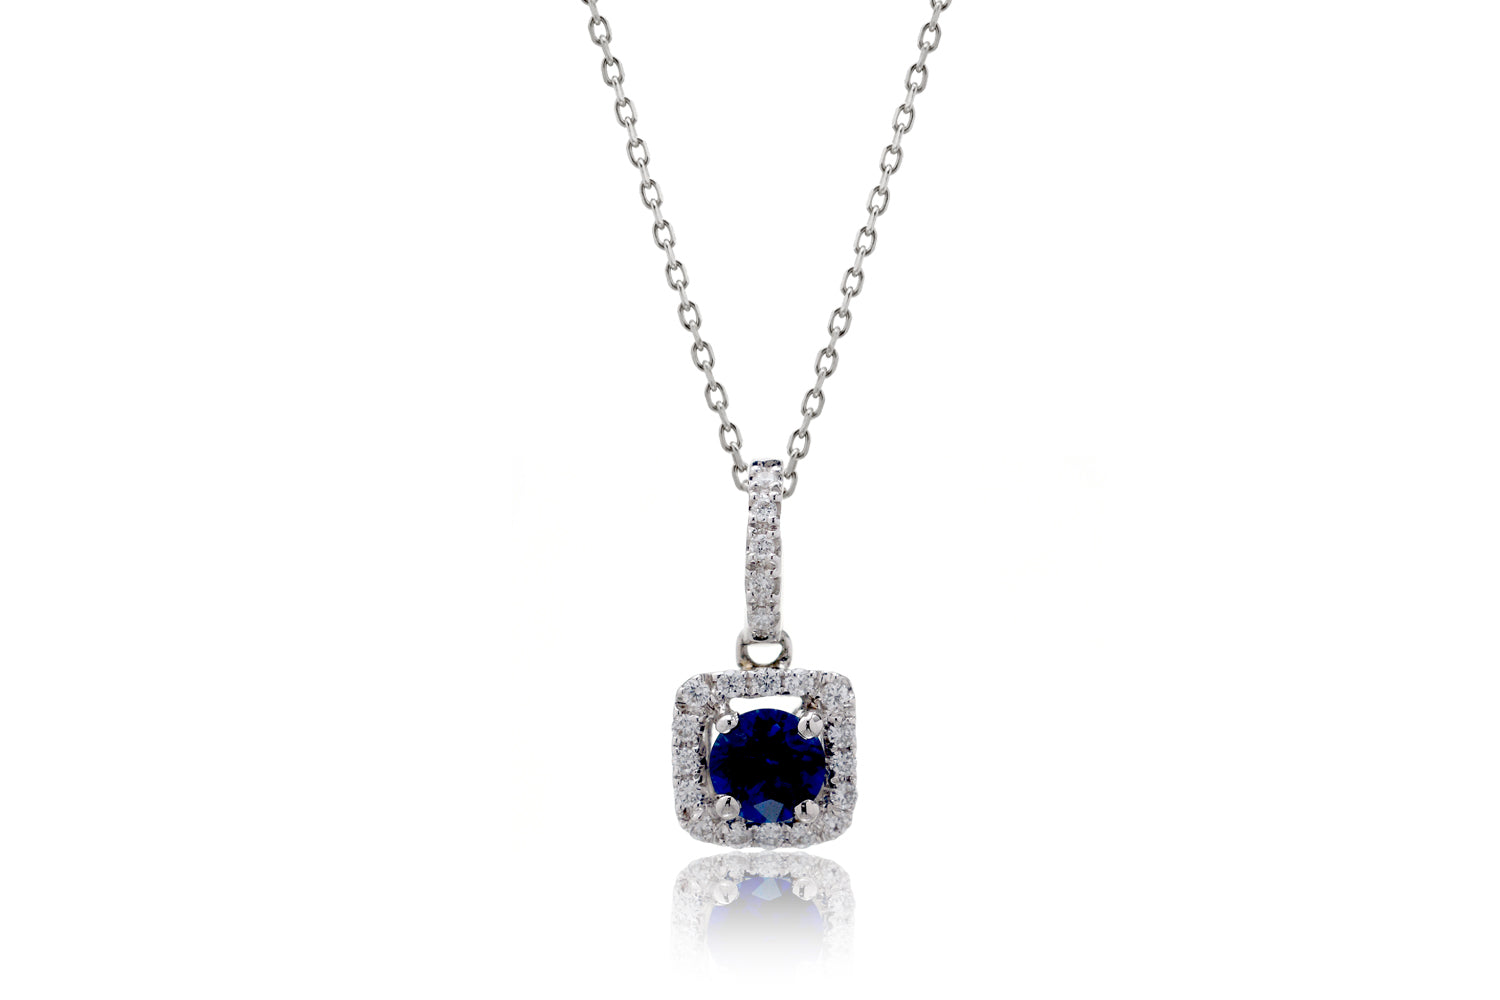 The Round Sapphire With Cushion Diamond Halo Pendant